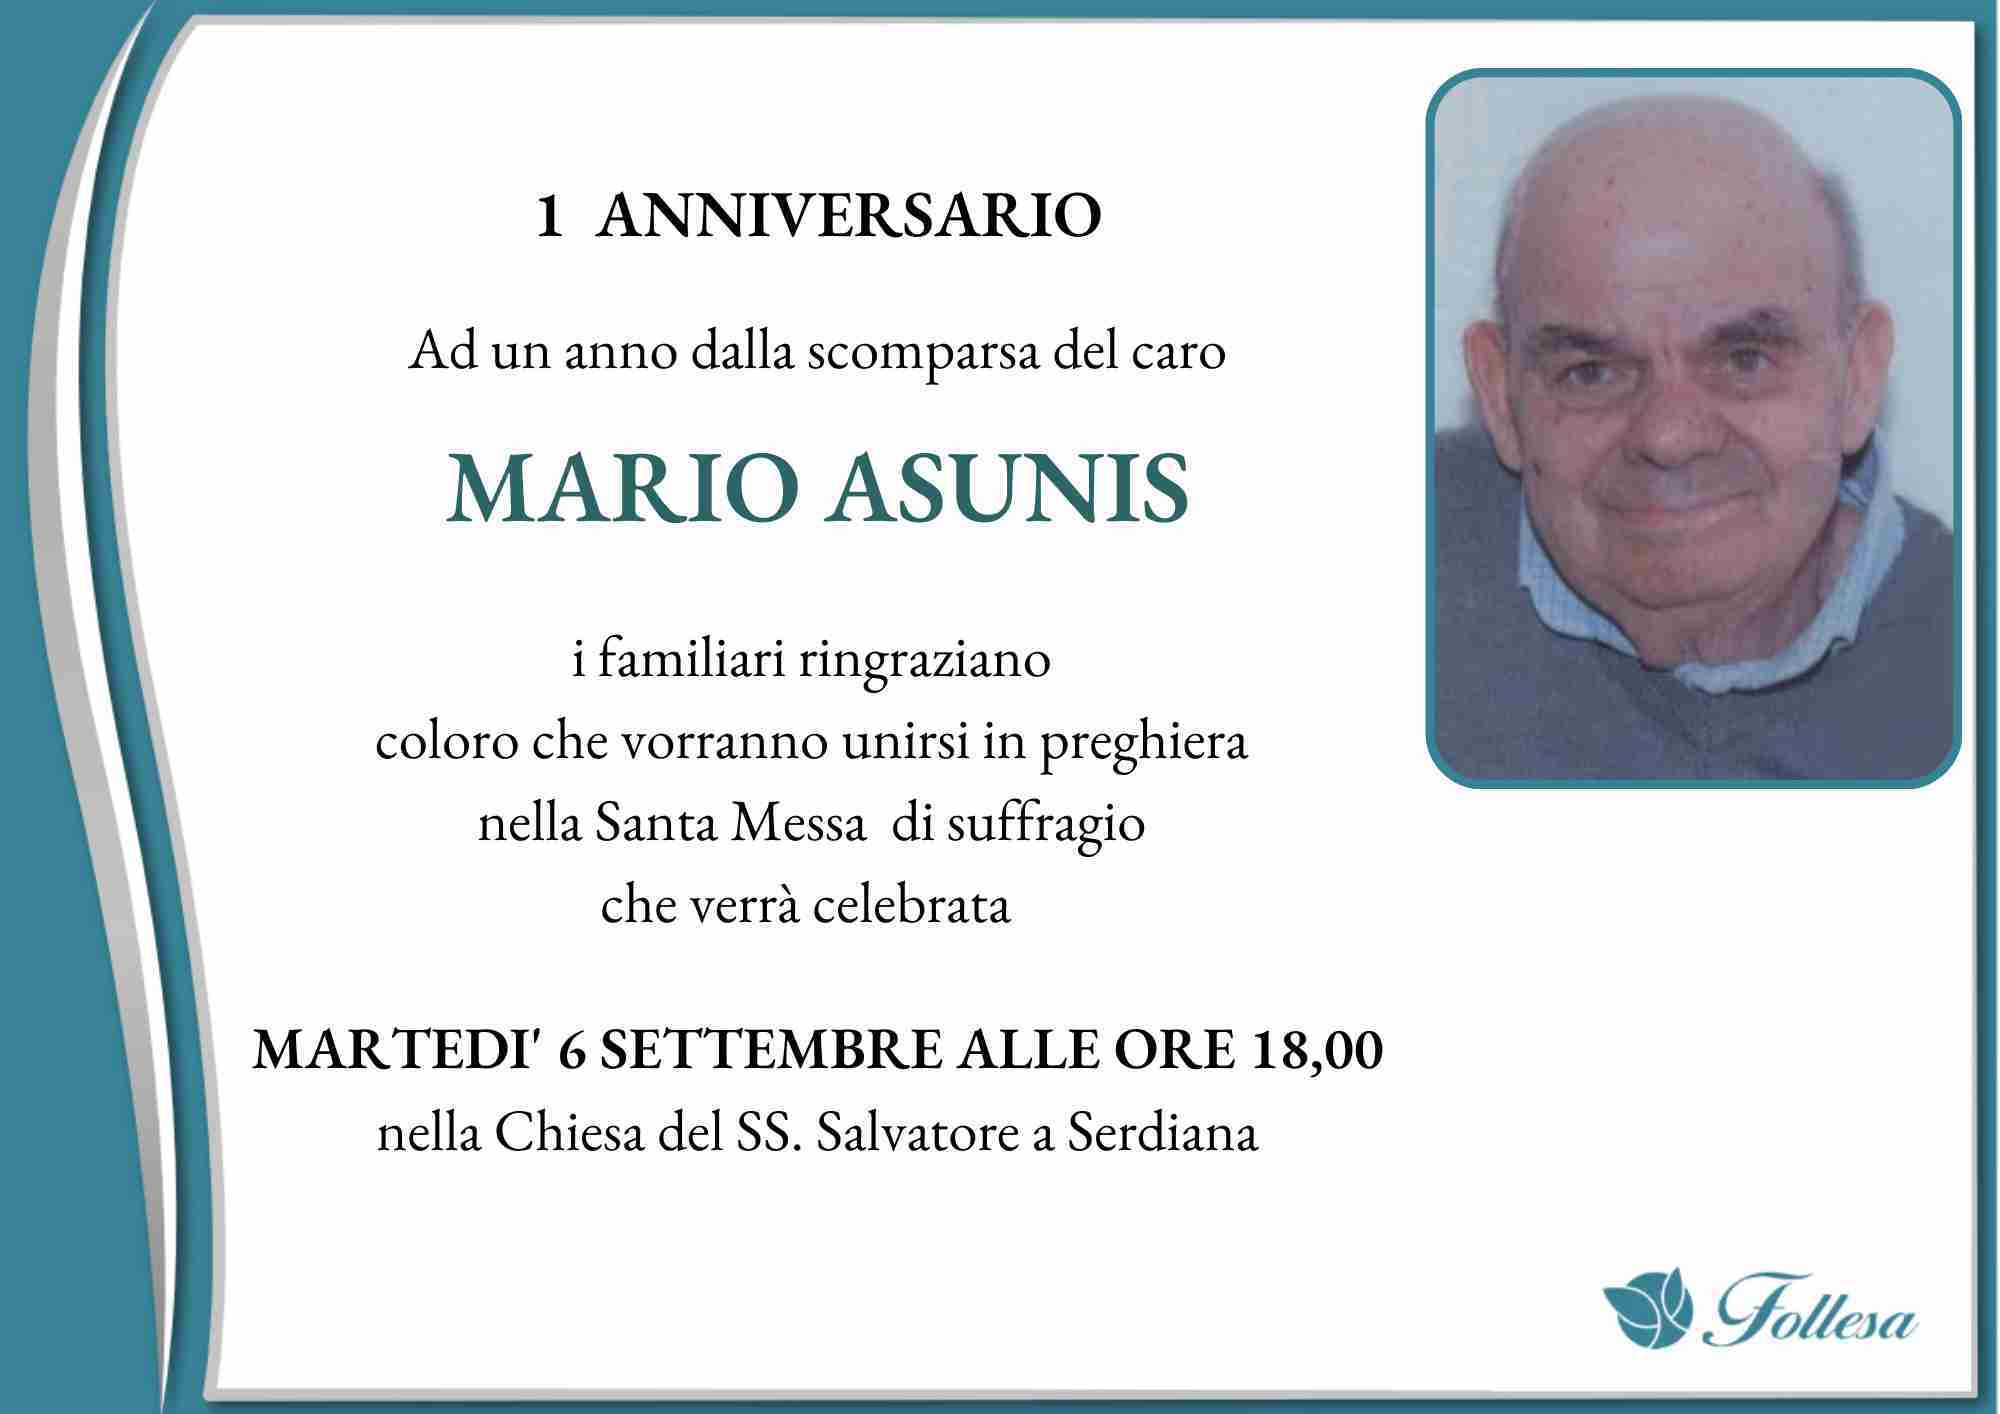 Mario Asunis